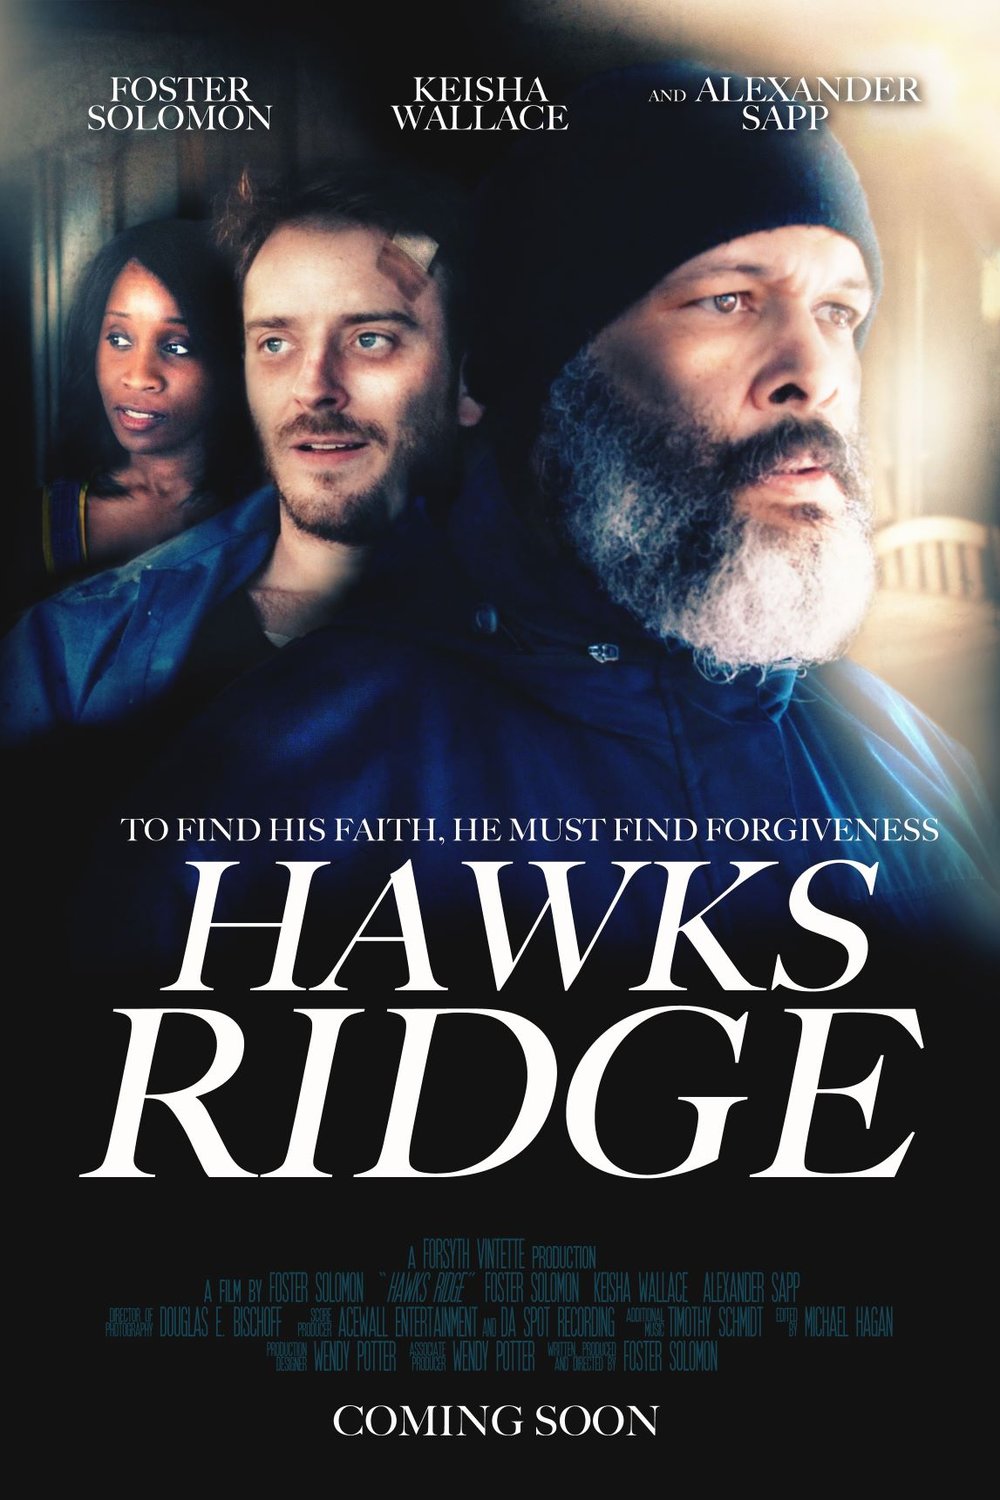 Poster of the movie Hawks Ridge